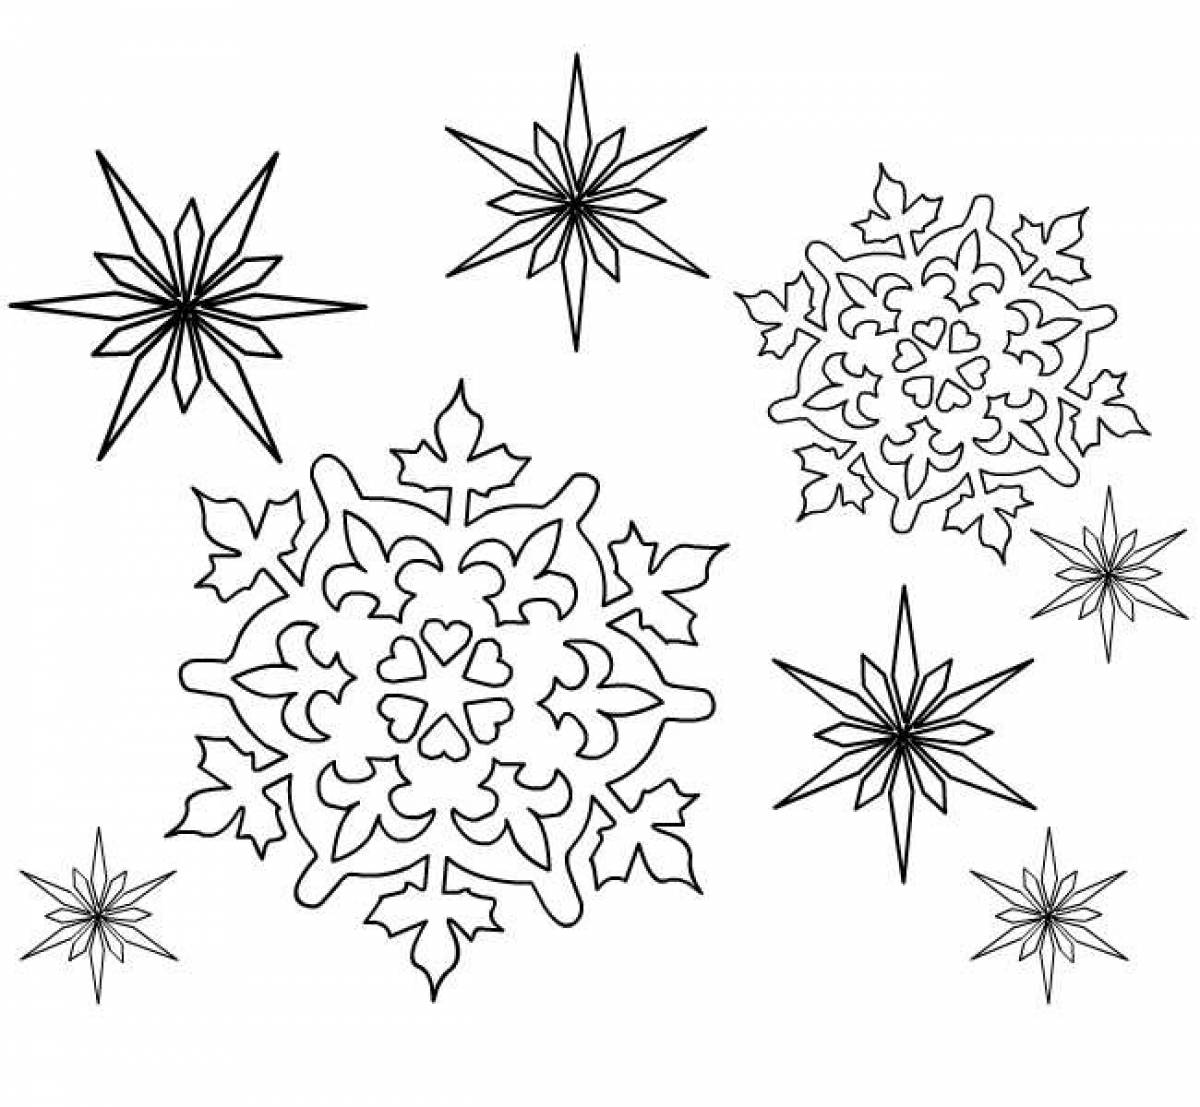 Drawing winter patterns